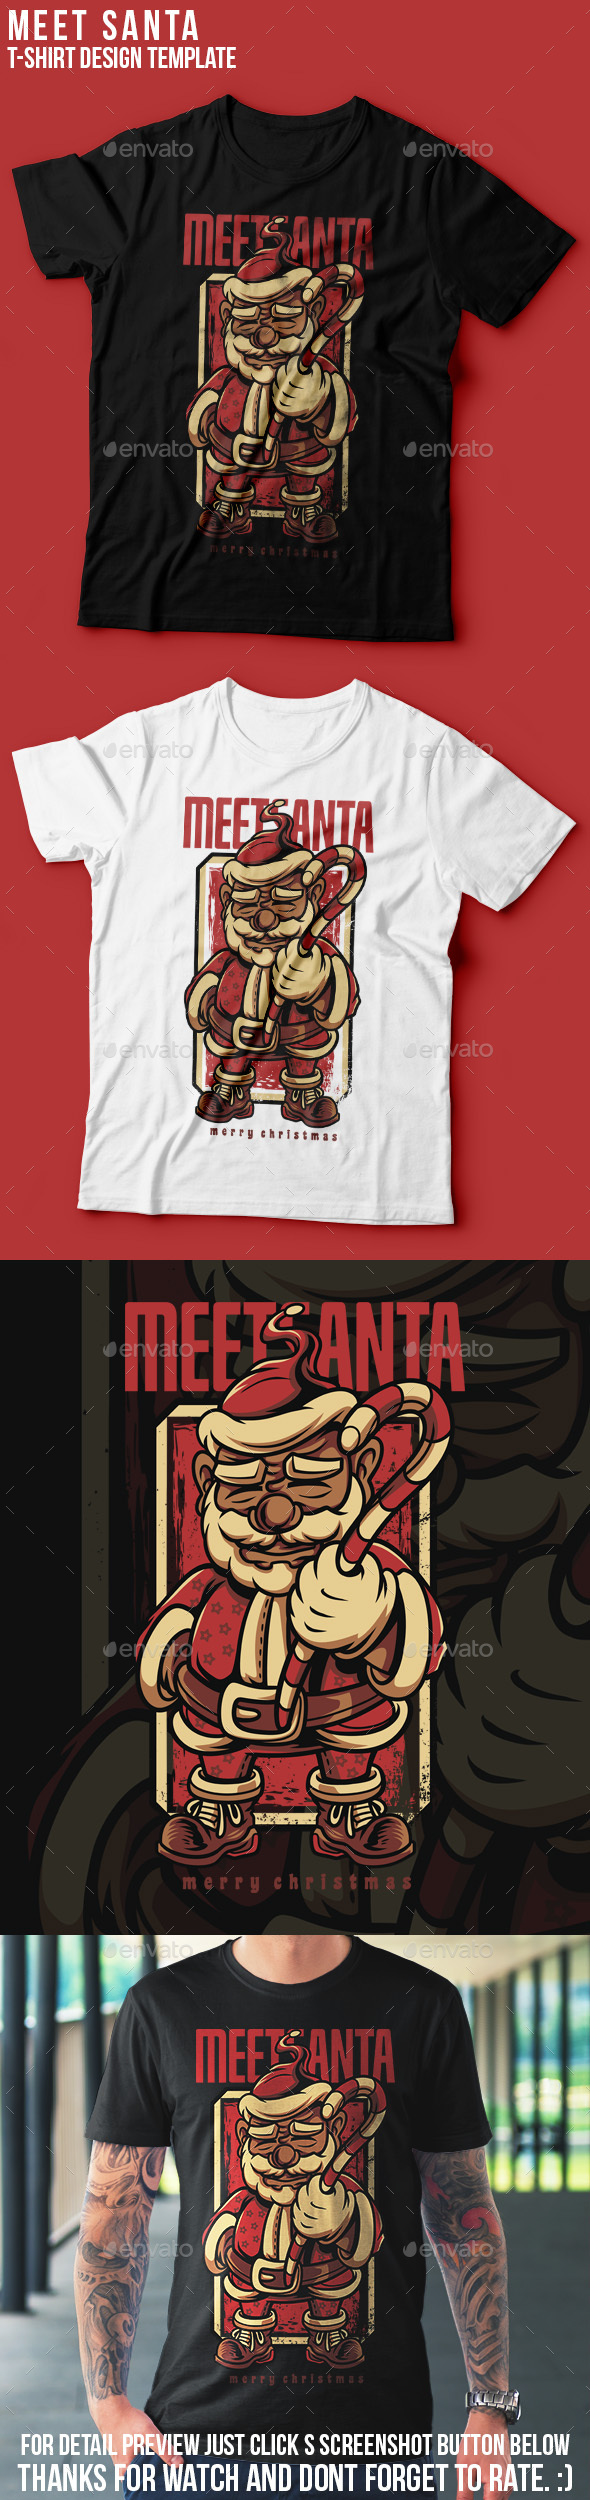 [DOWNLOAD]Meet Santa Happy Christmas T-Shirt Design